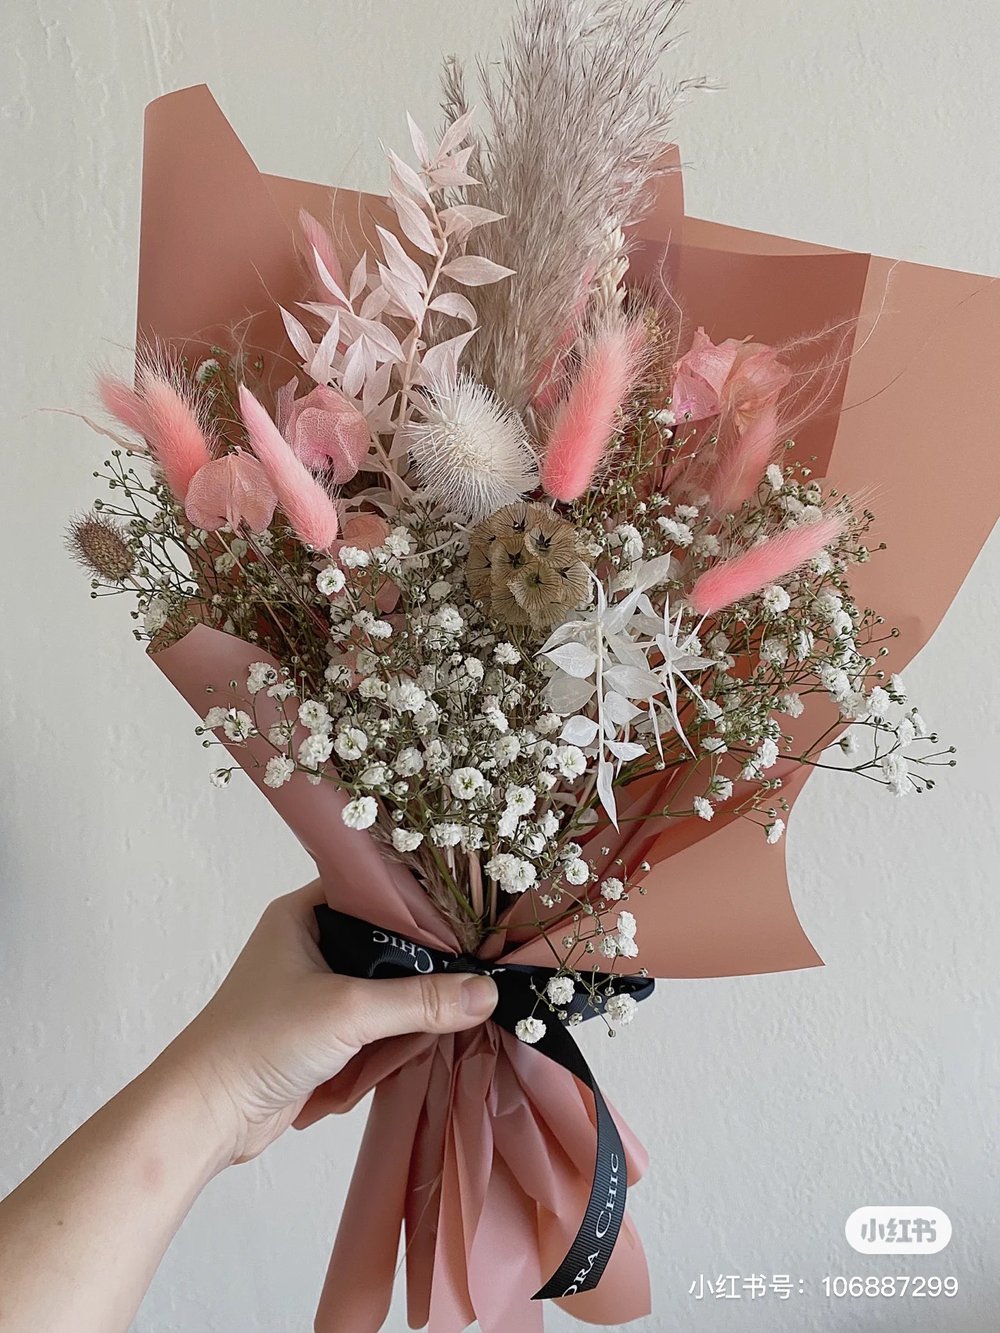 Pink Dried Flower Bouquet